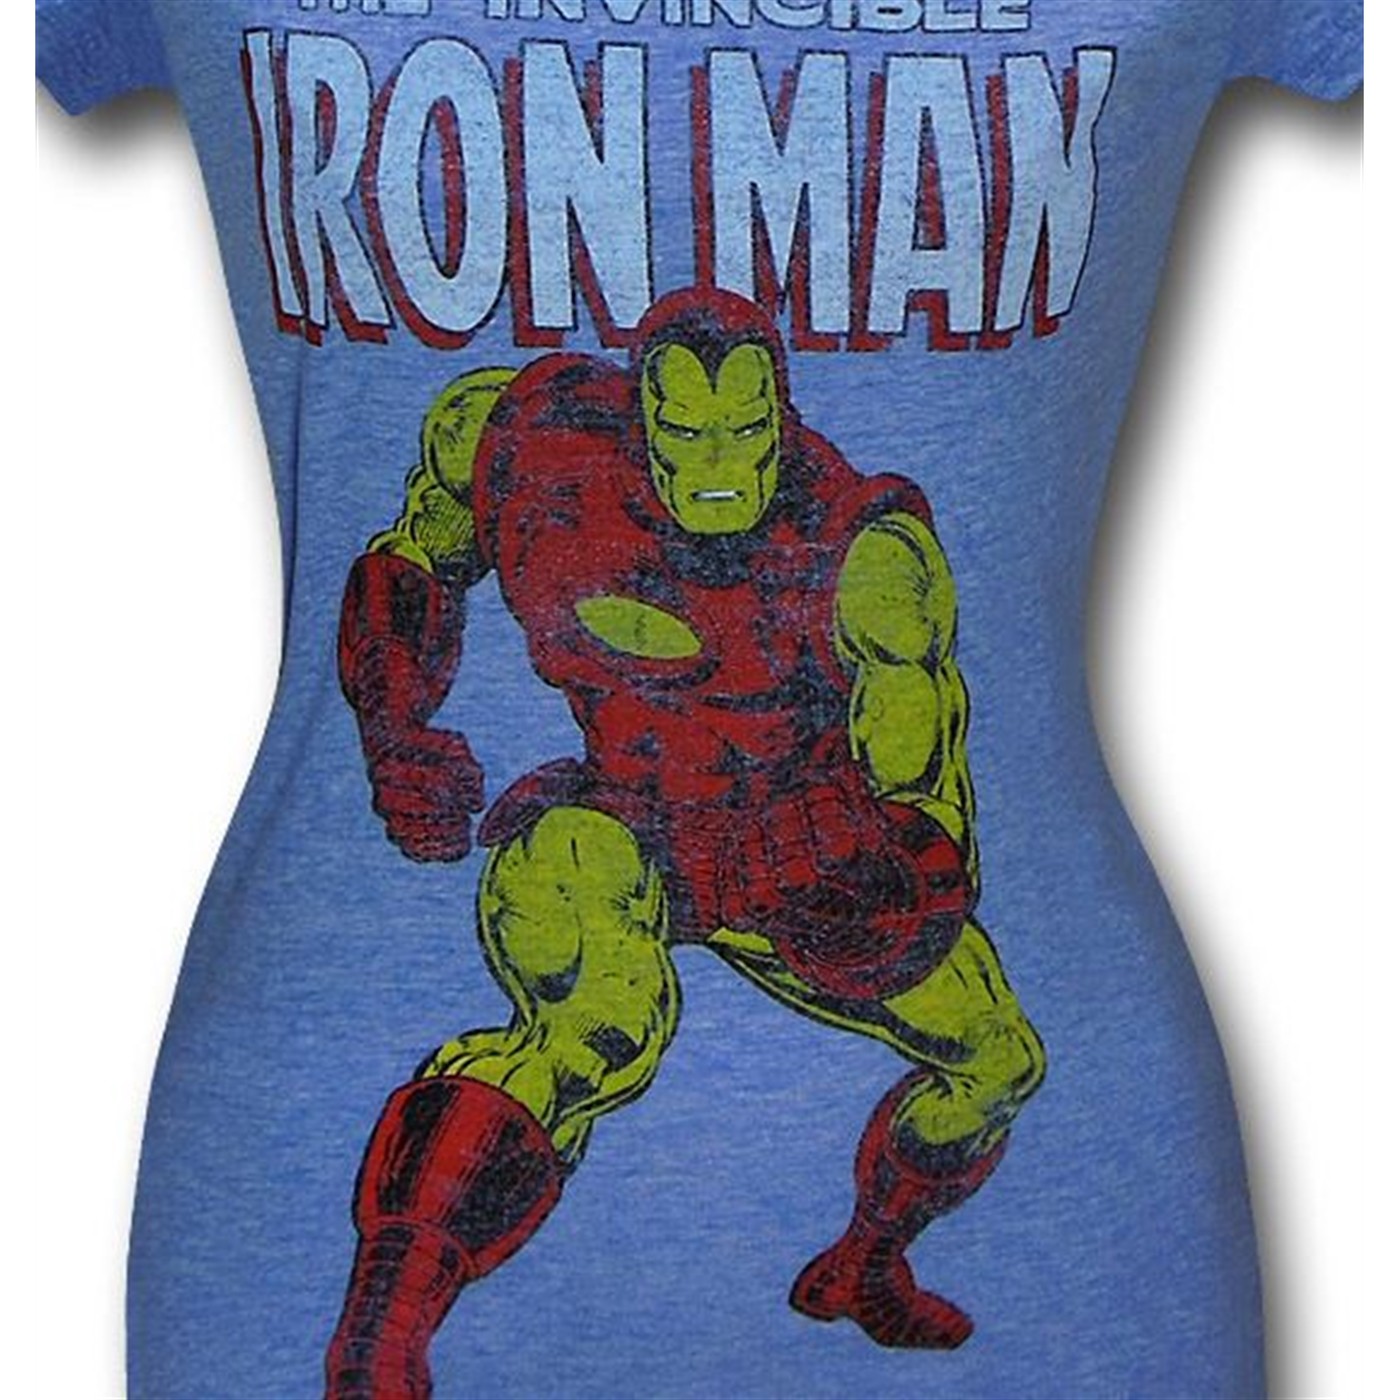 Iron Man Classic Heather Blue Juniors T-Shirt